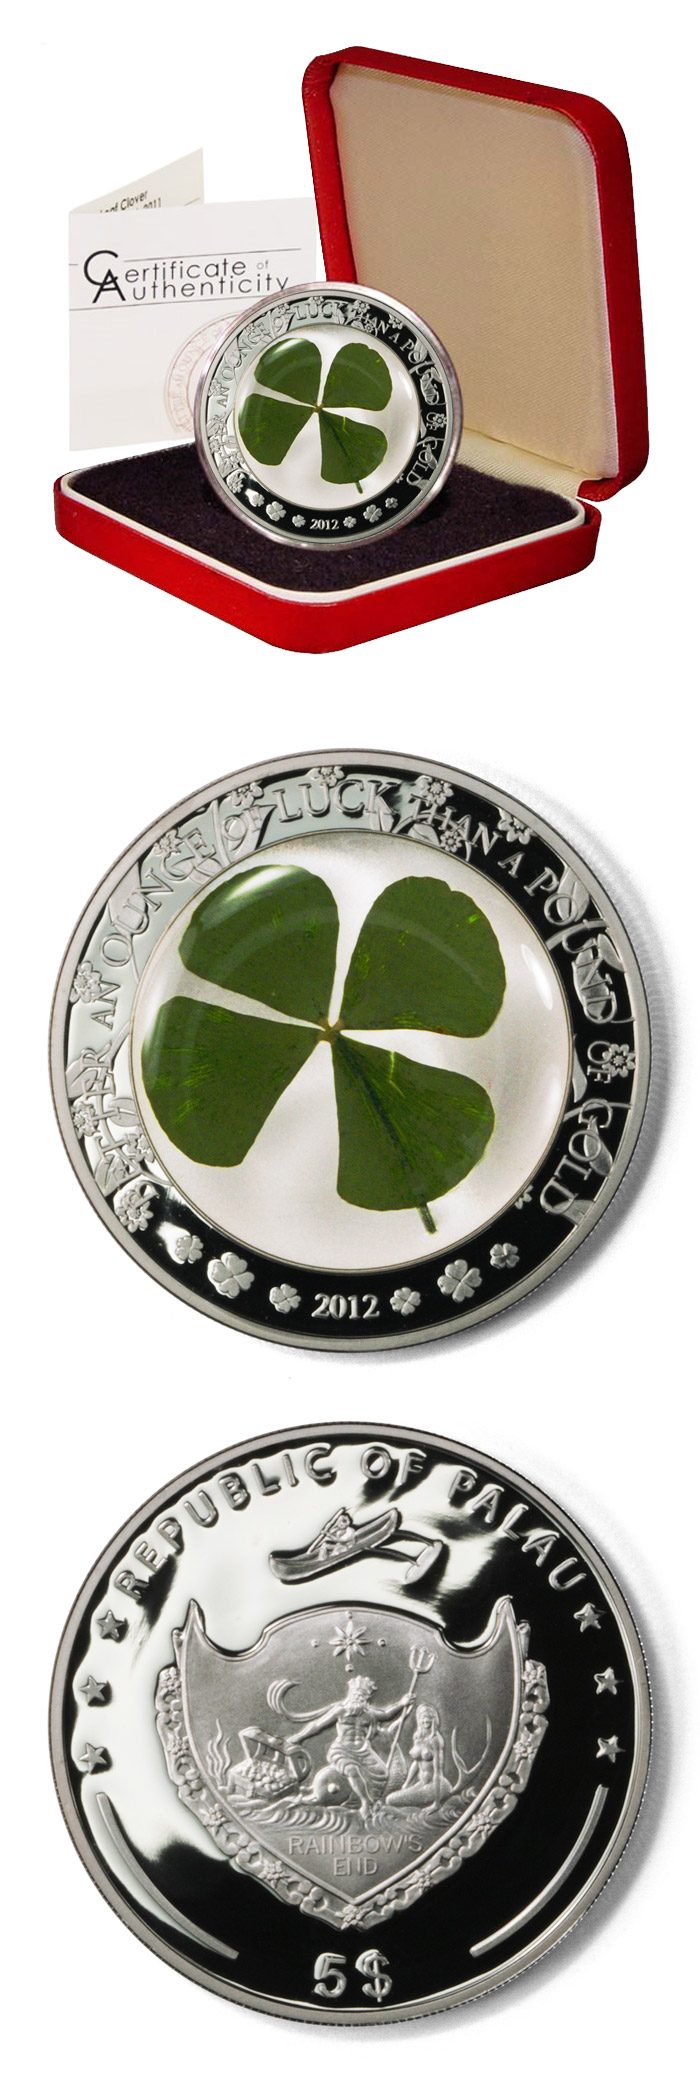 1oz Silver Coin 'Ounce of Luck' Series 4-LEAF CLOVER with COA 2012 Palau $5 